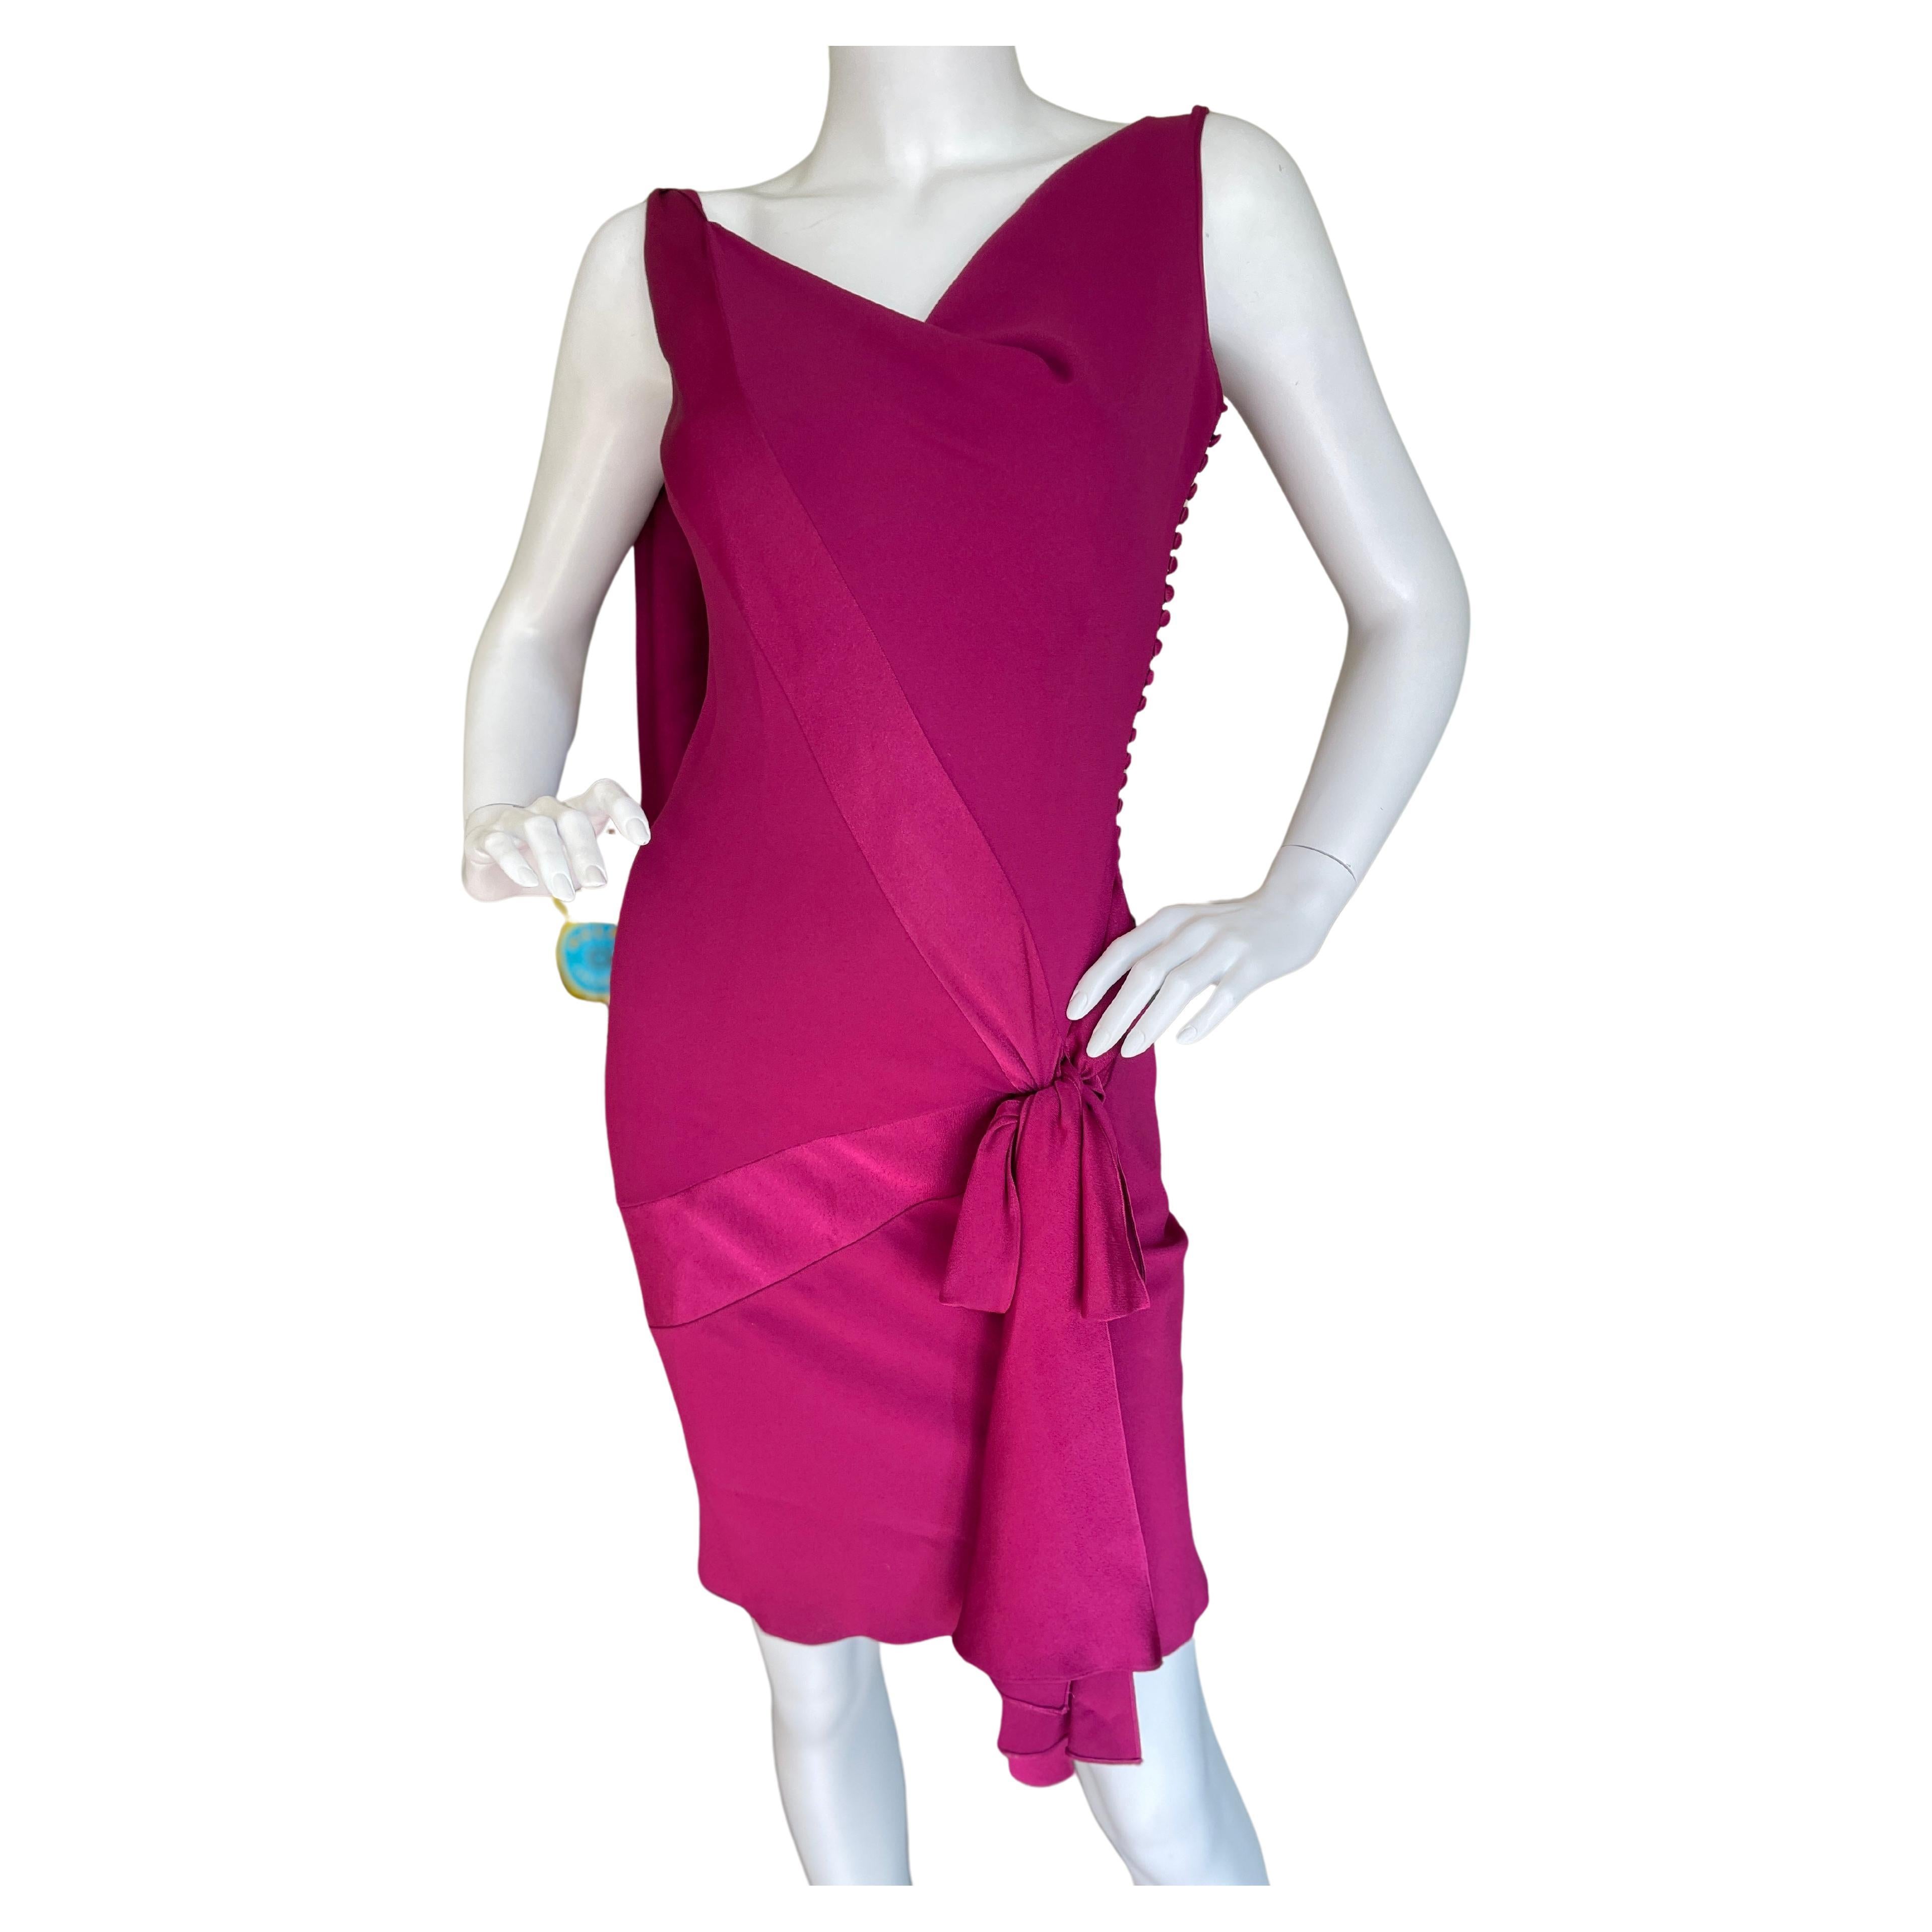  John Galliano Elegant Vintage 2004 Bias Cut Pink Evening Dress  For Sale